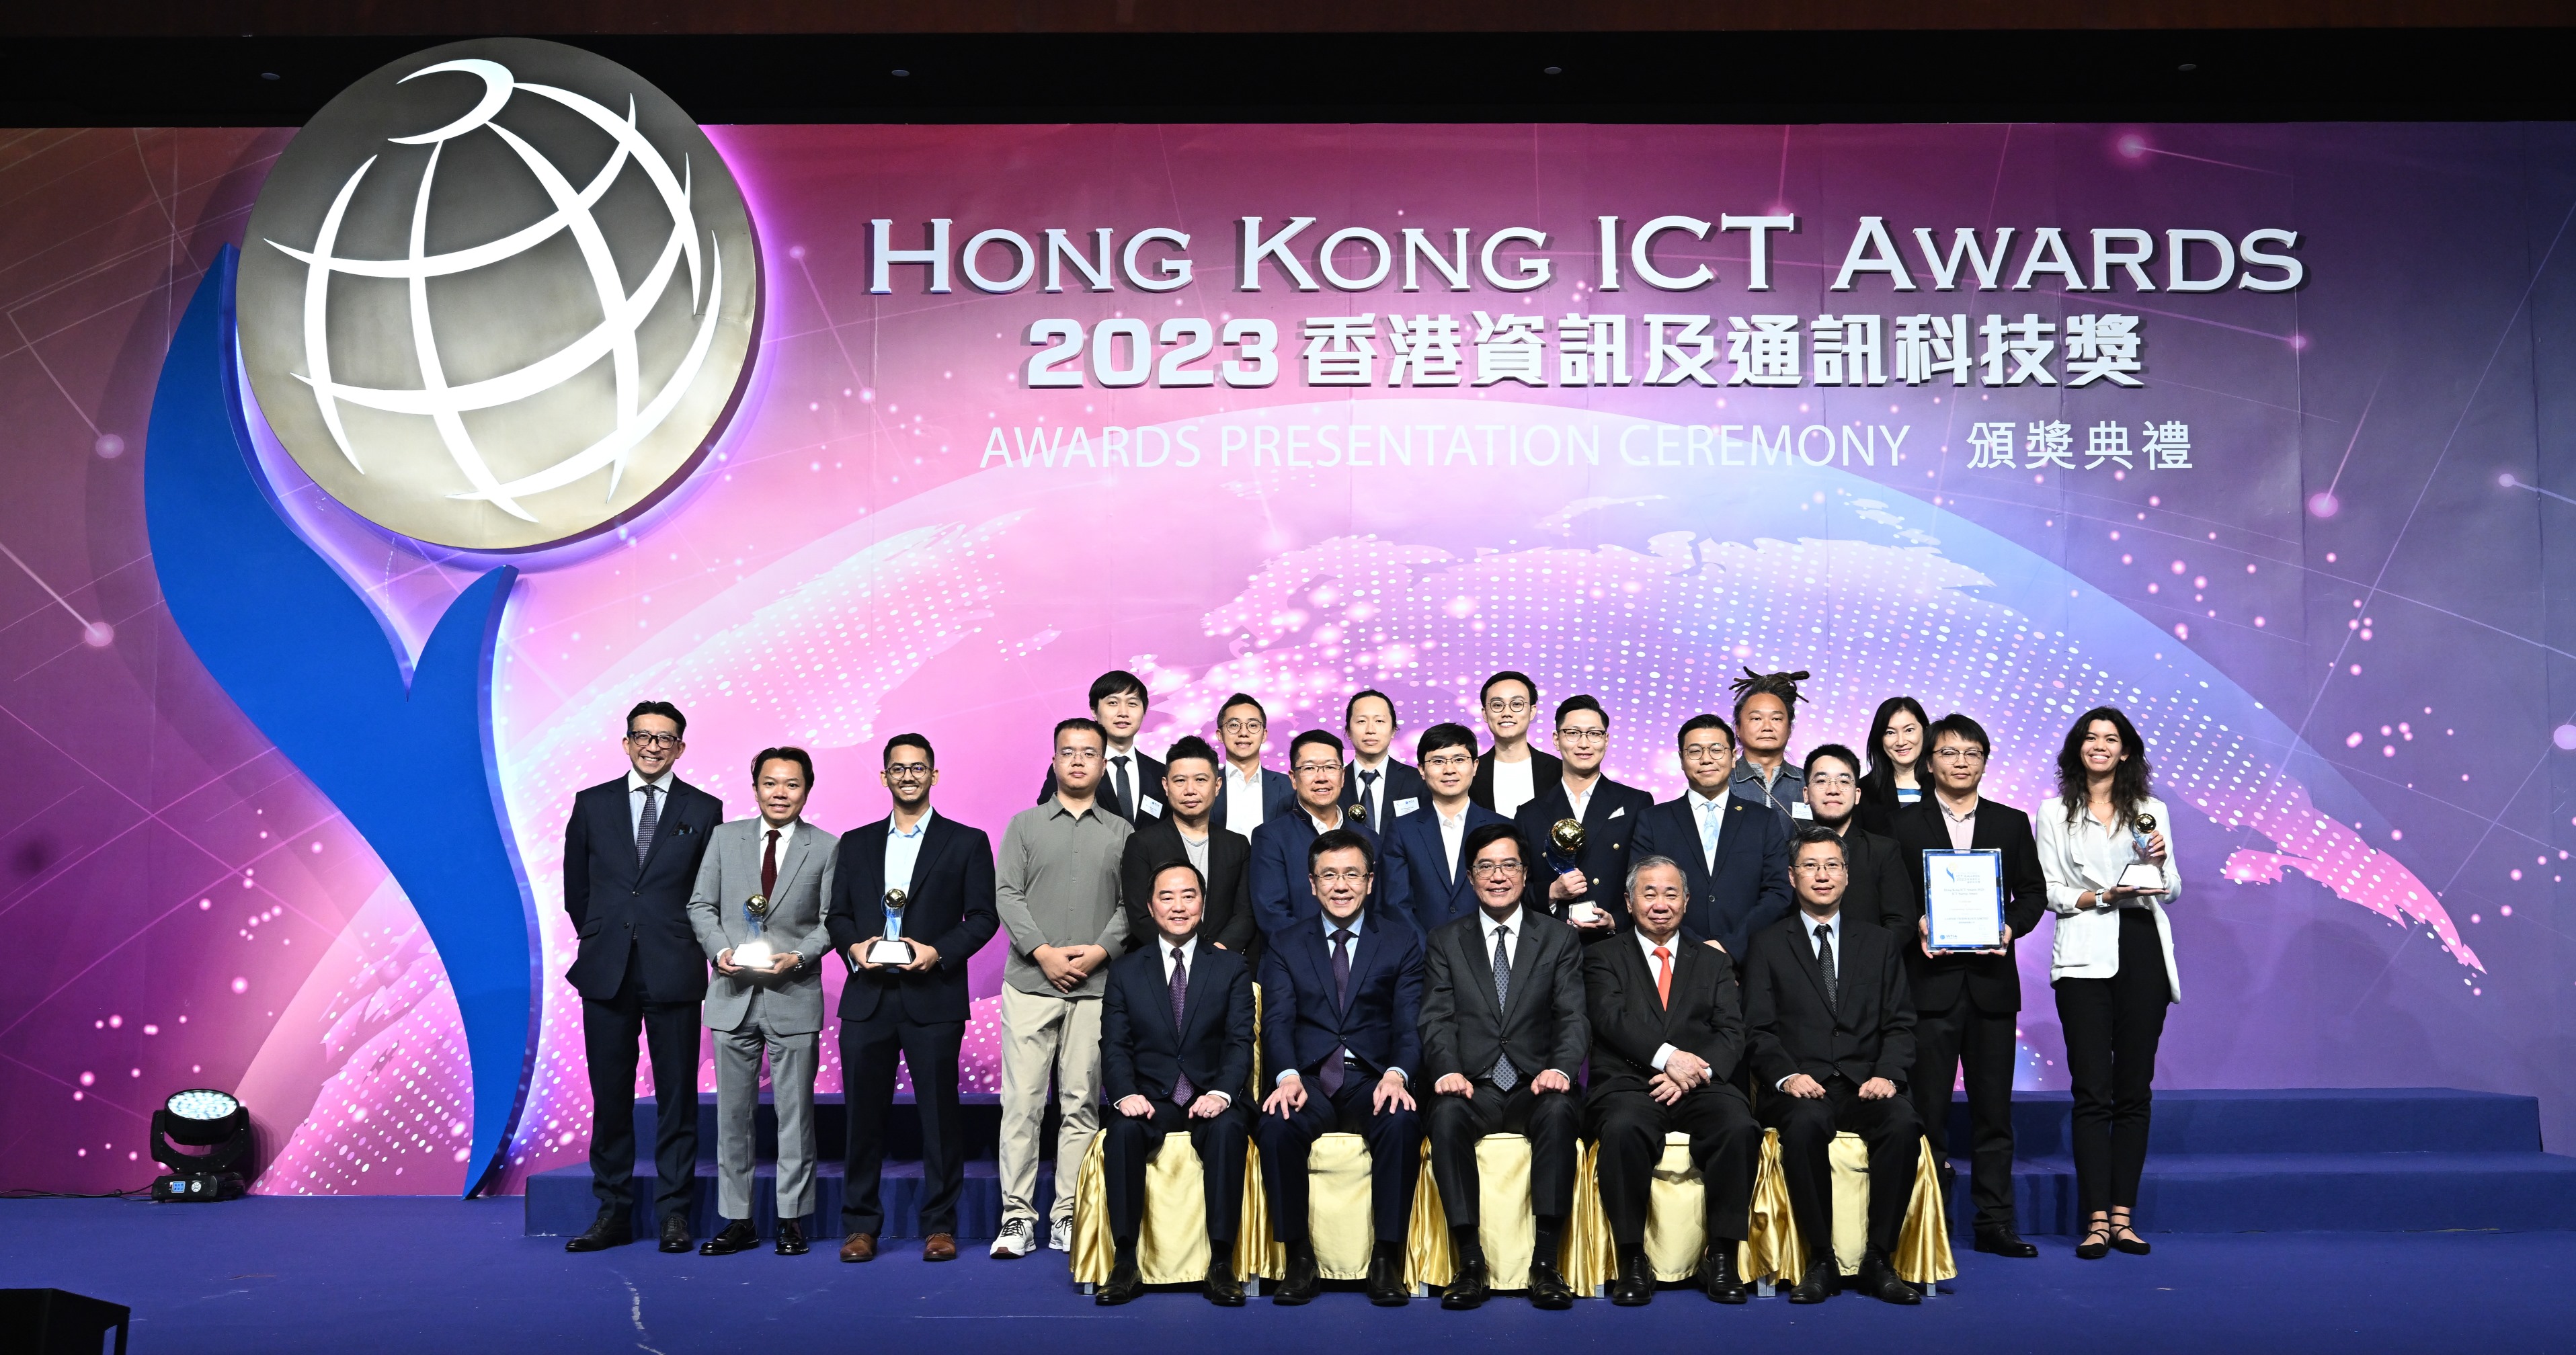 Hong Kong ICT Awards 2023 ICT Startup Award Winners Group Photo